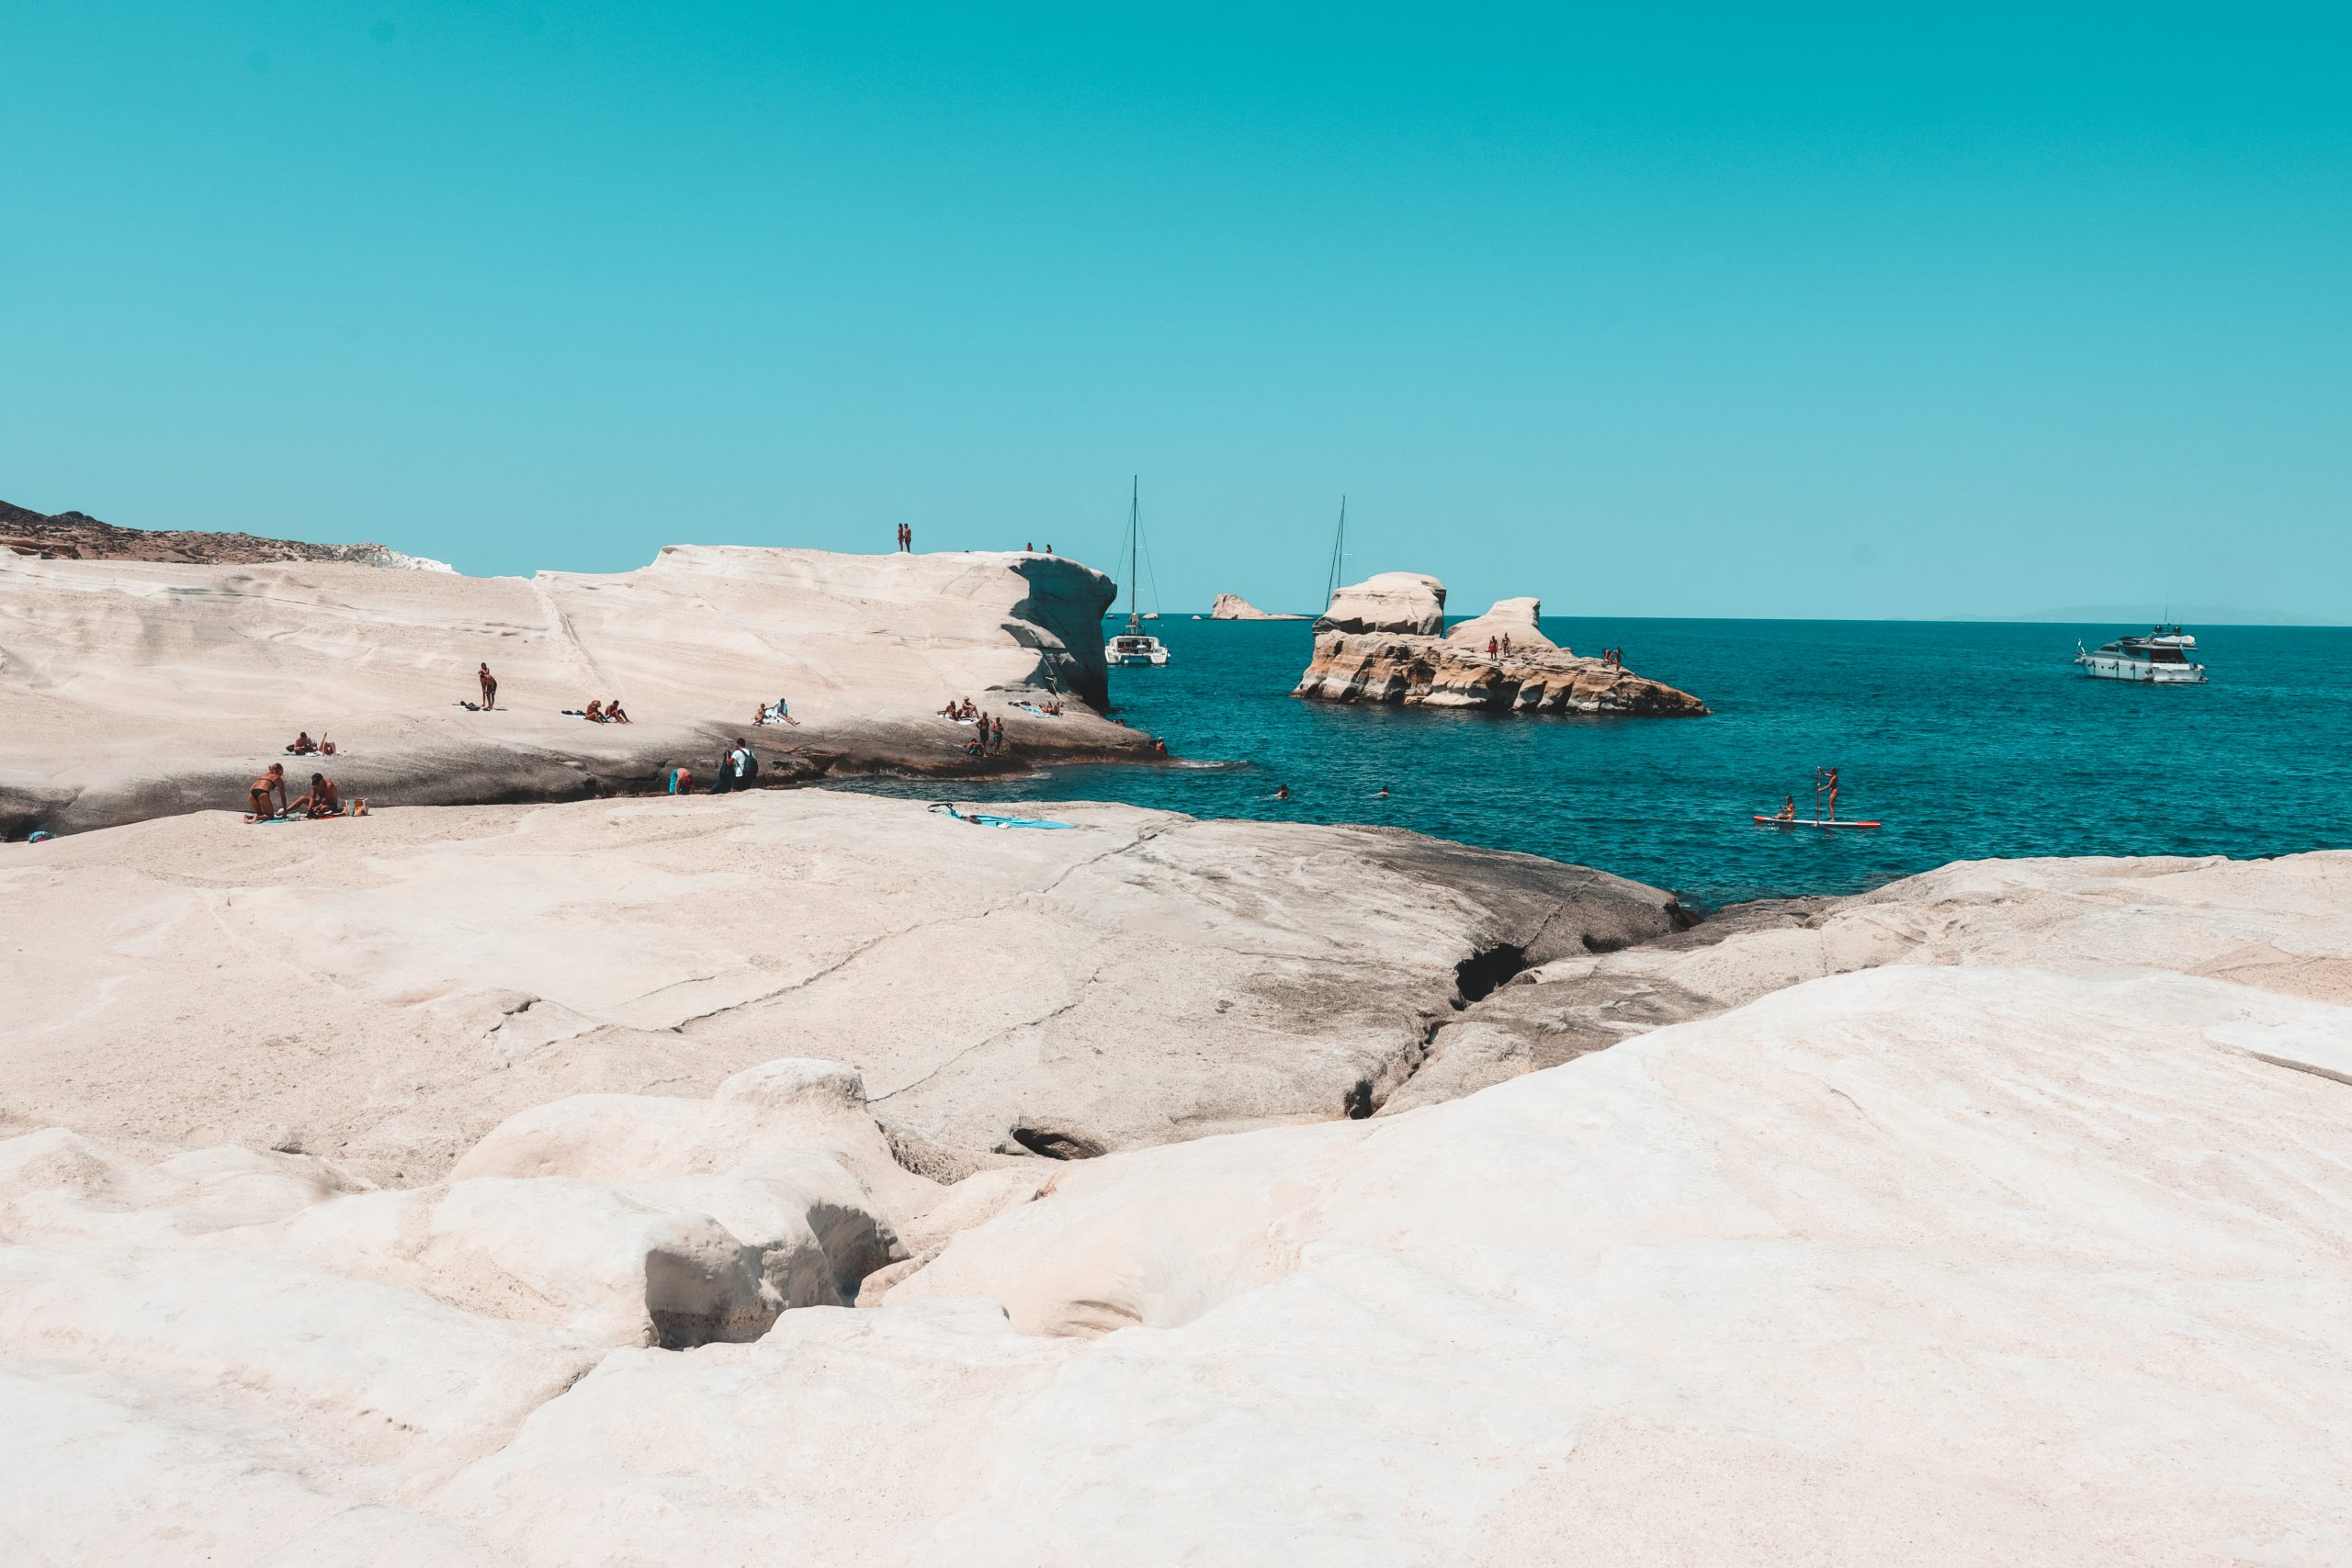 A view of the turquoise sea from the Sarakiniko white rocks